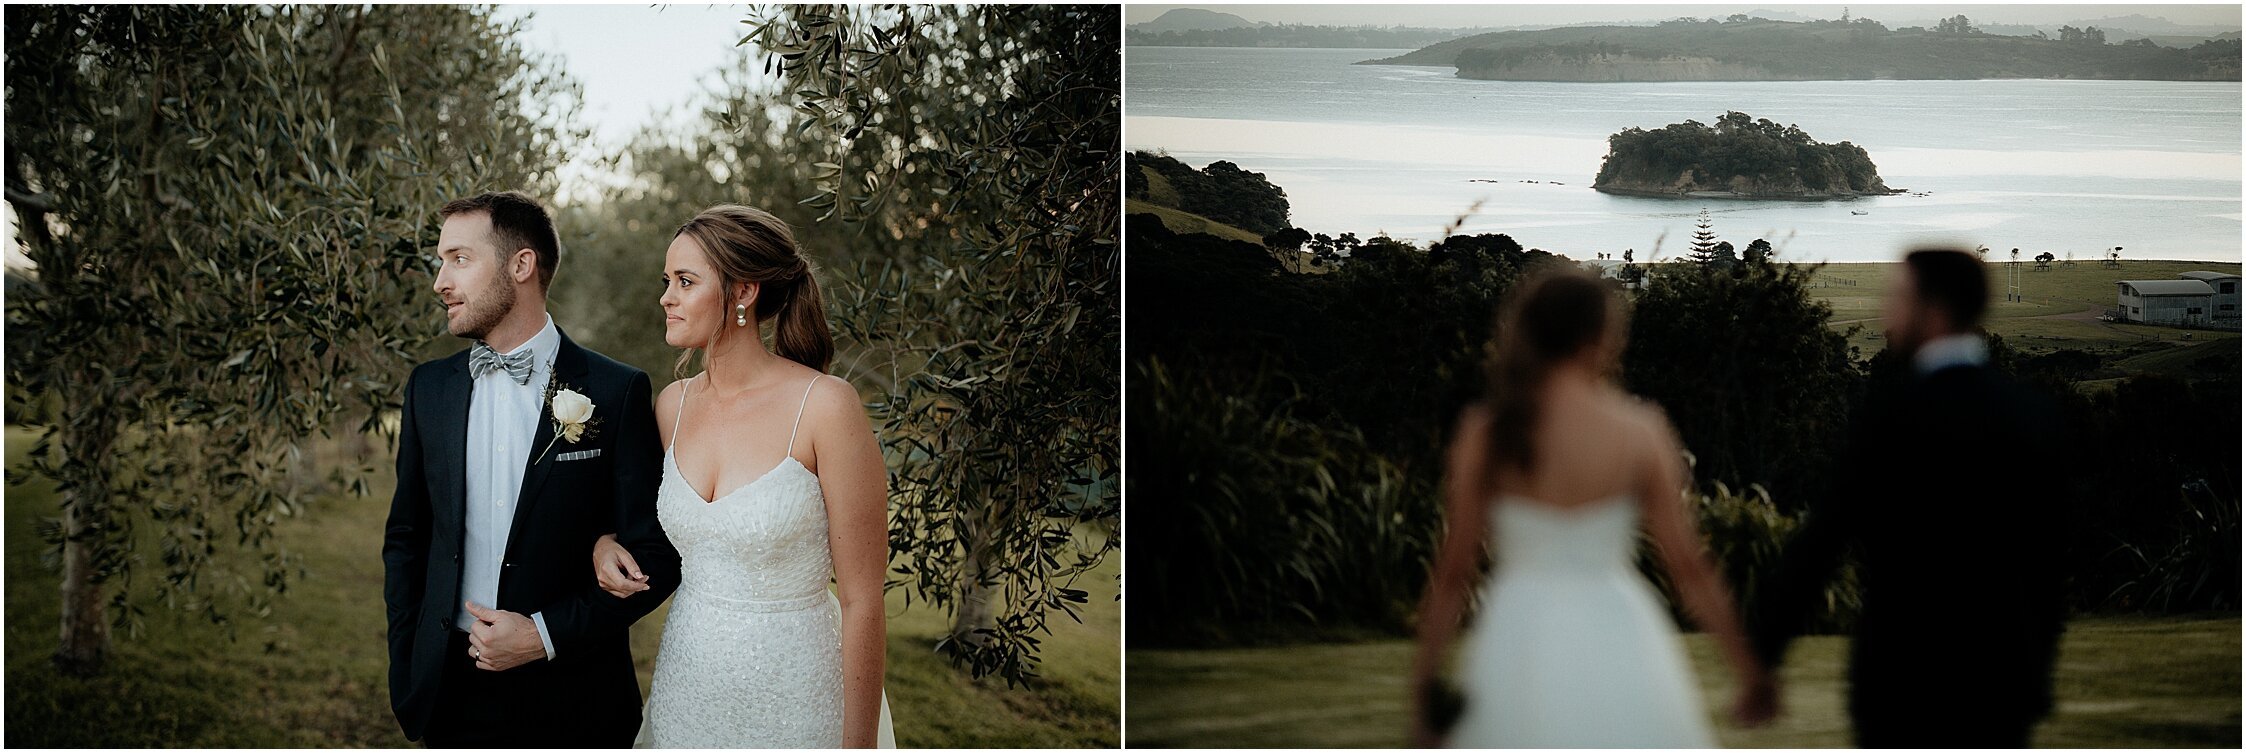 Zanda+Auckland+wedding+photographer+chic+vibrant+Cable+Bay+vineyard+venue+Waiheke+Island+New+Zealand_52.jpeg